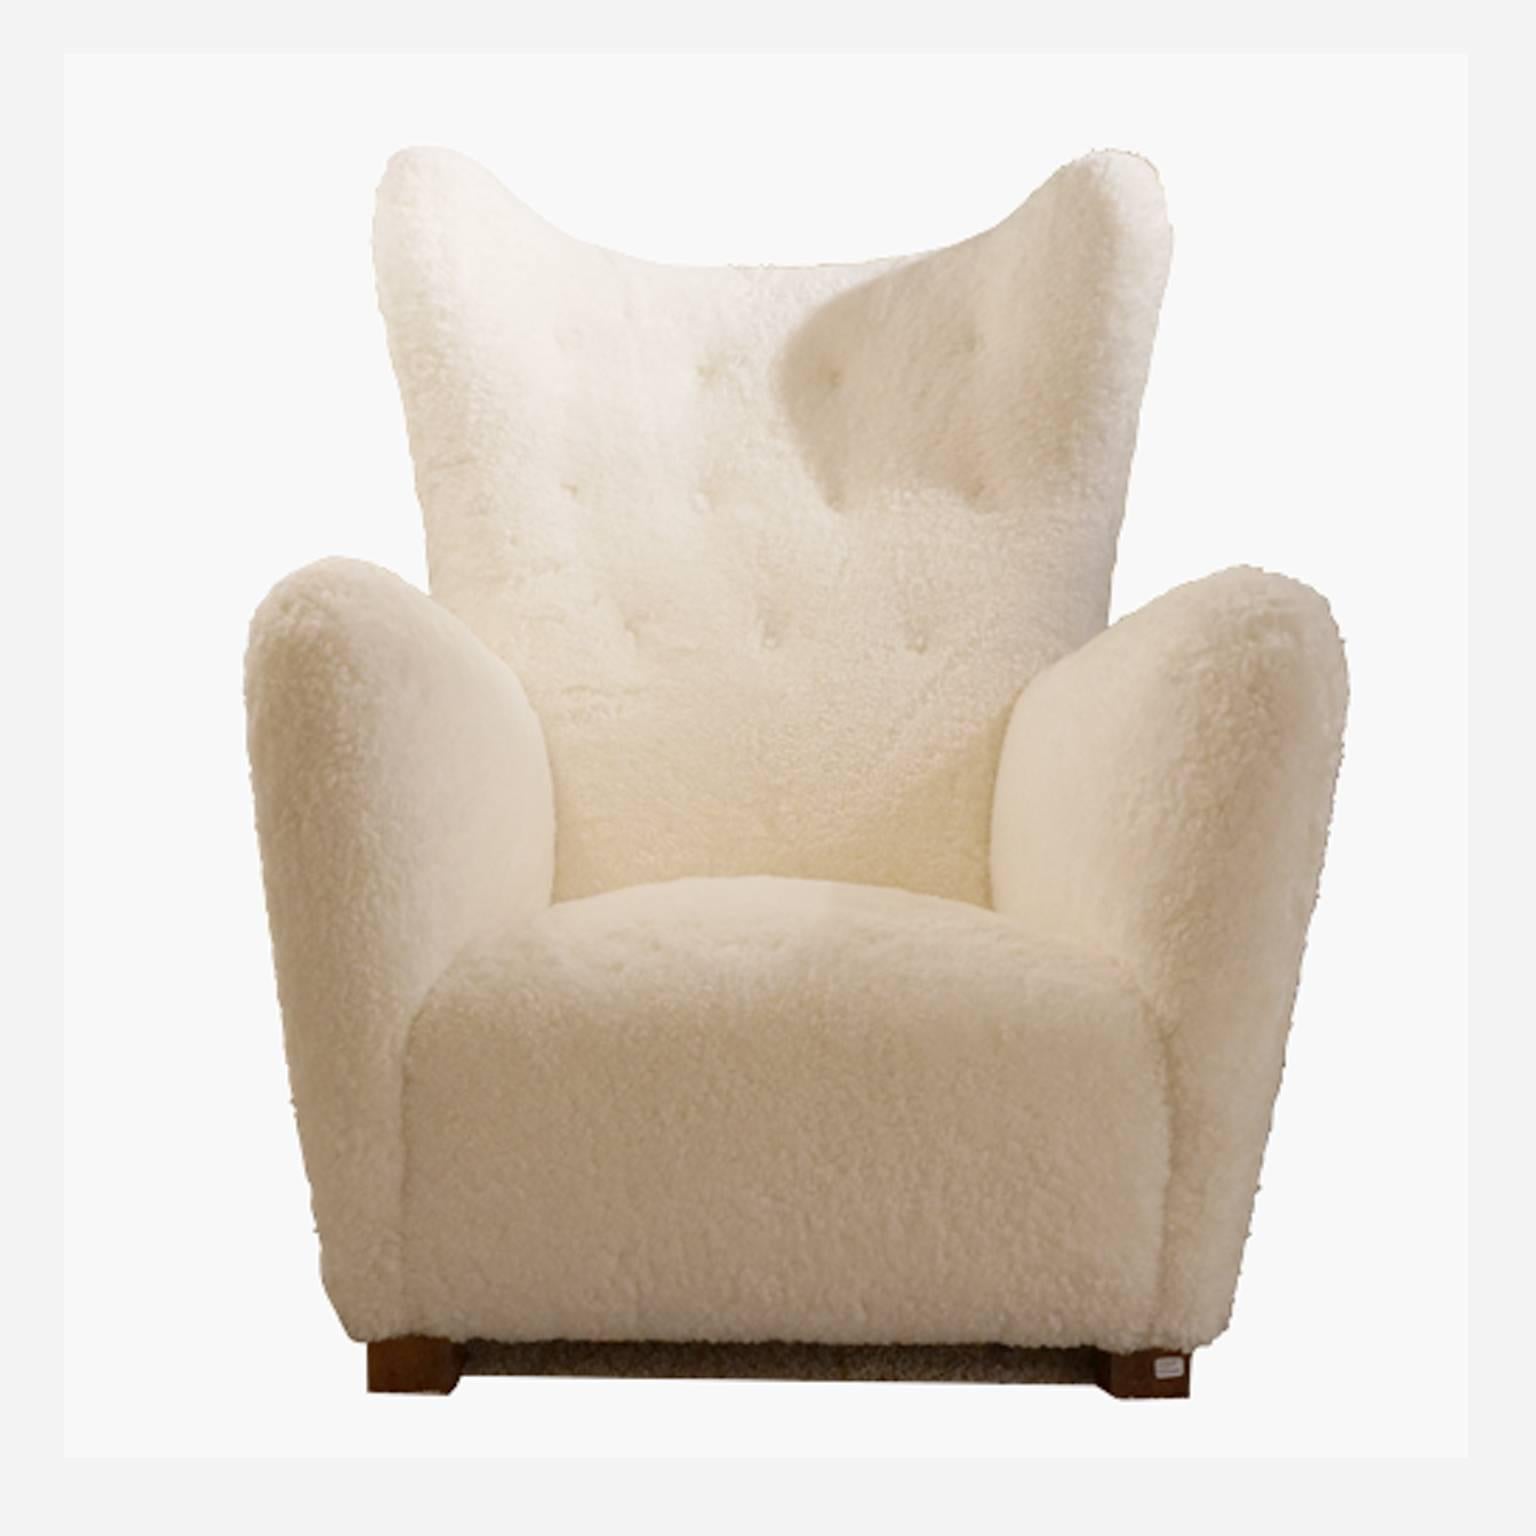 Scandinavian Modern One Wingback Lounge Chair by Fritz Hansen, White Sheep Skin, 1940s For Sale